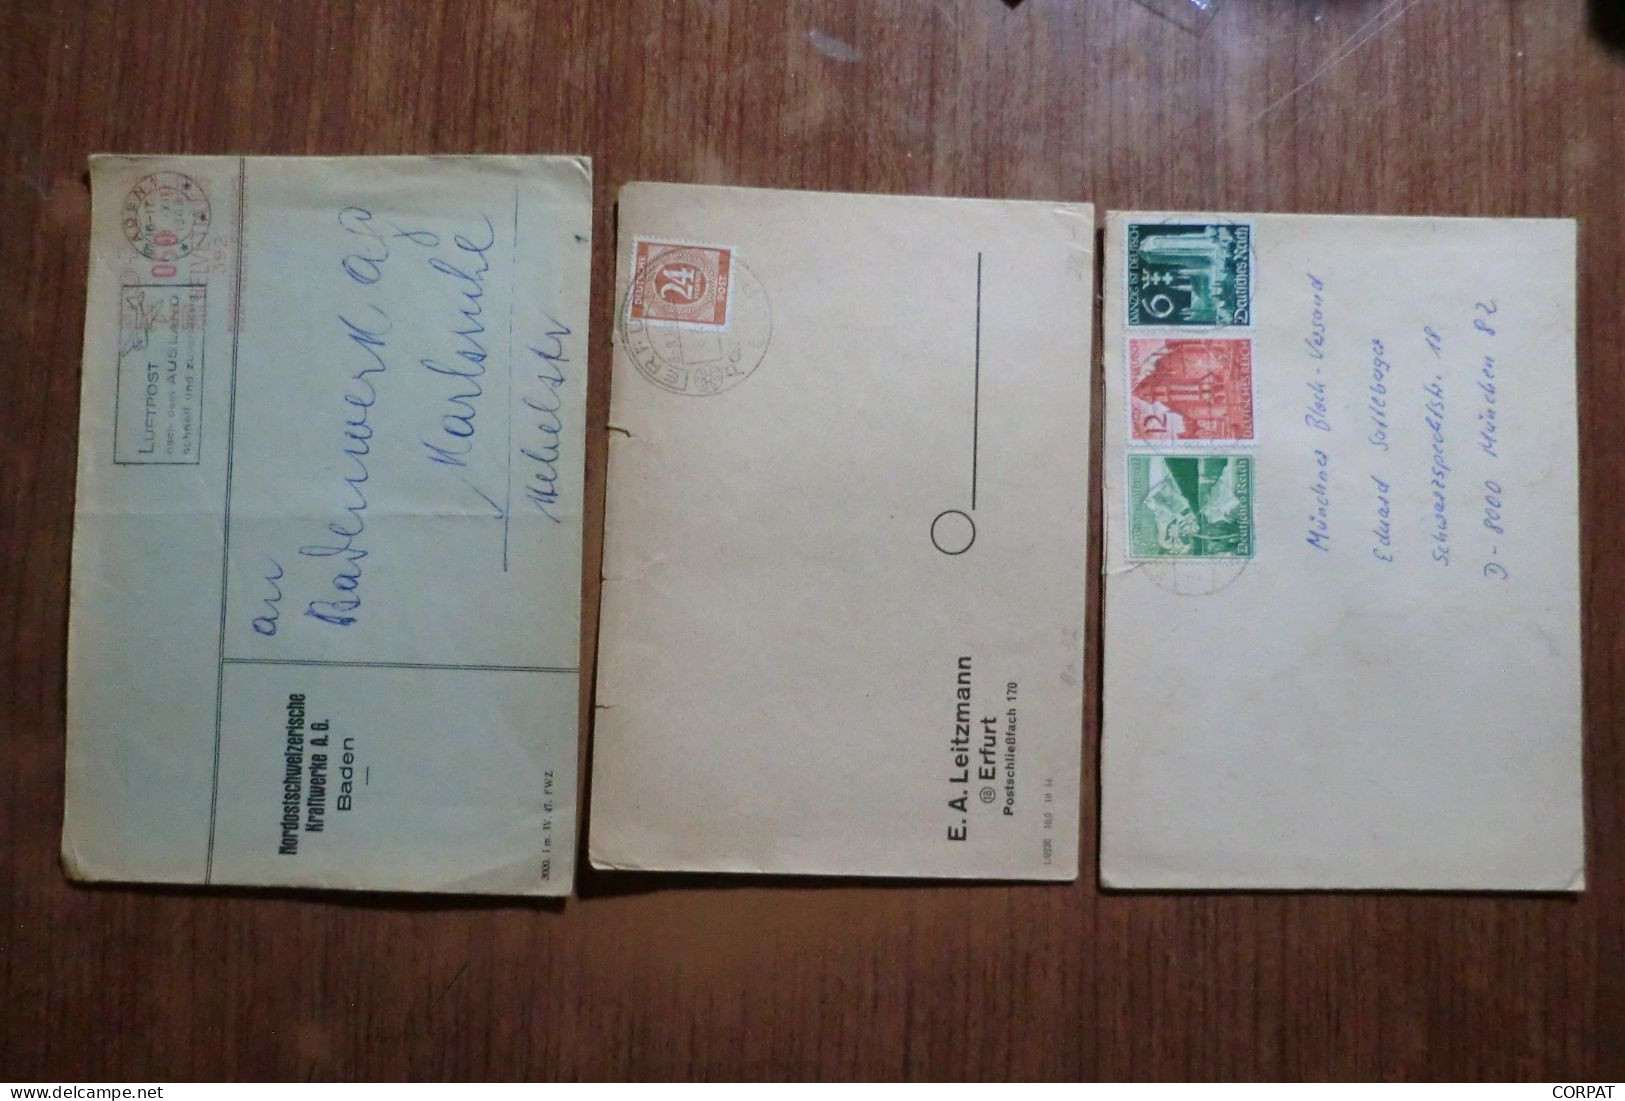 Germany:postcards,envelopes,folders ecc.